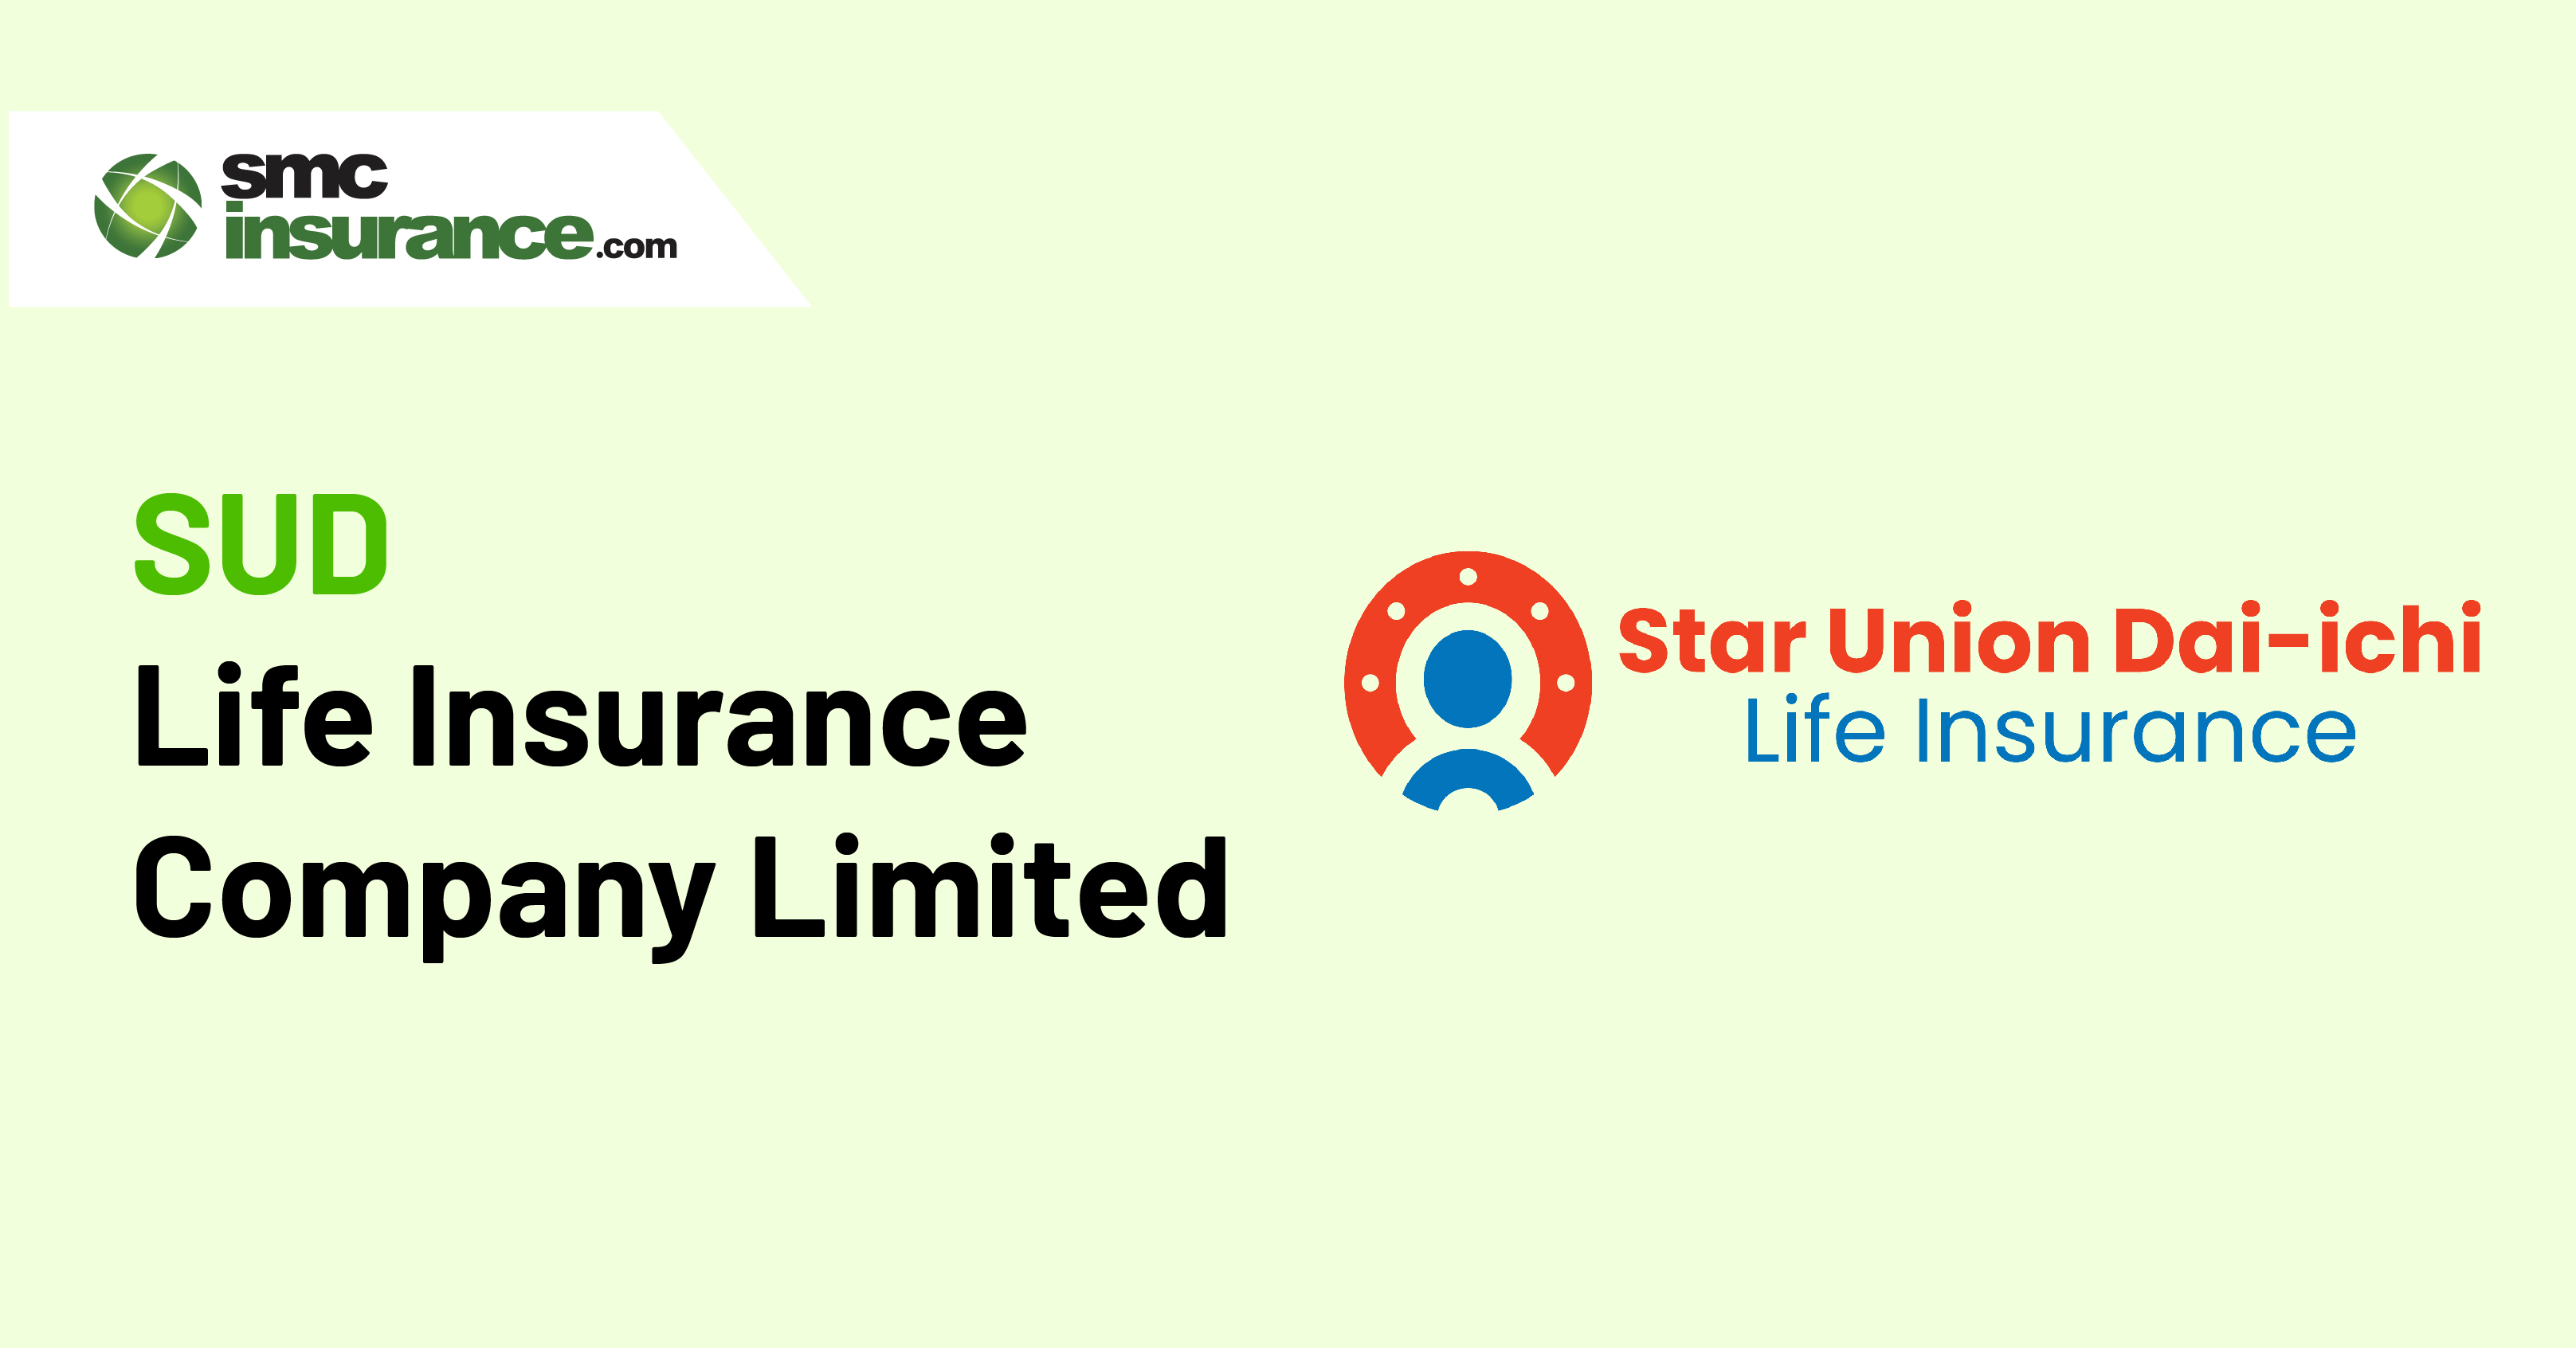 SUD Life Insurance Company Limited